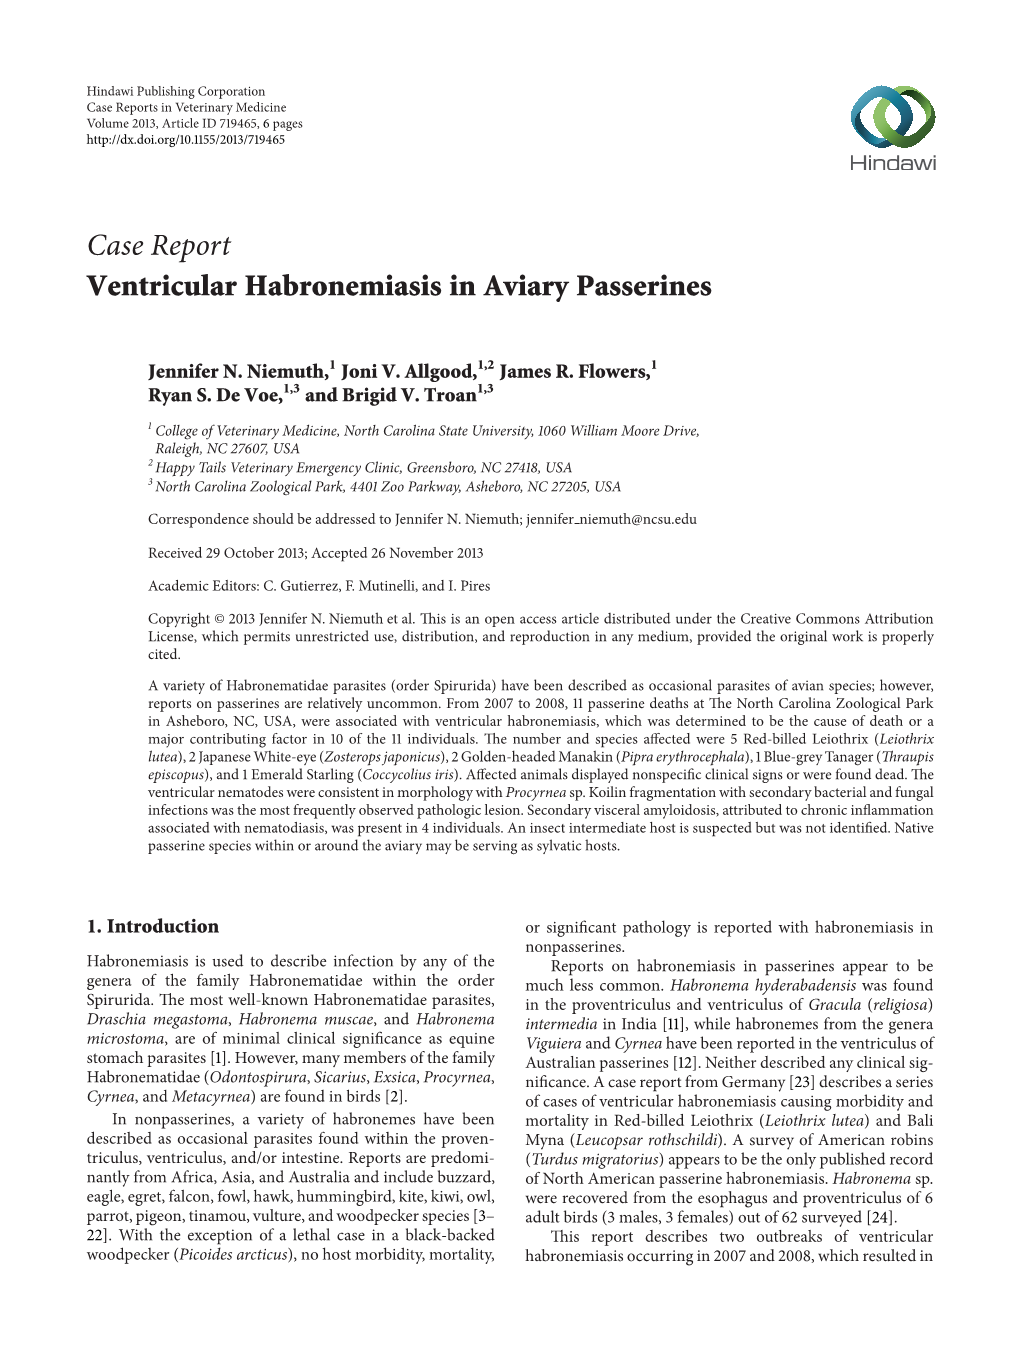 Ventricular Habronemiasis in Aviary Passerines